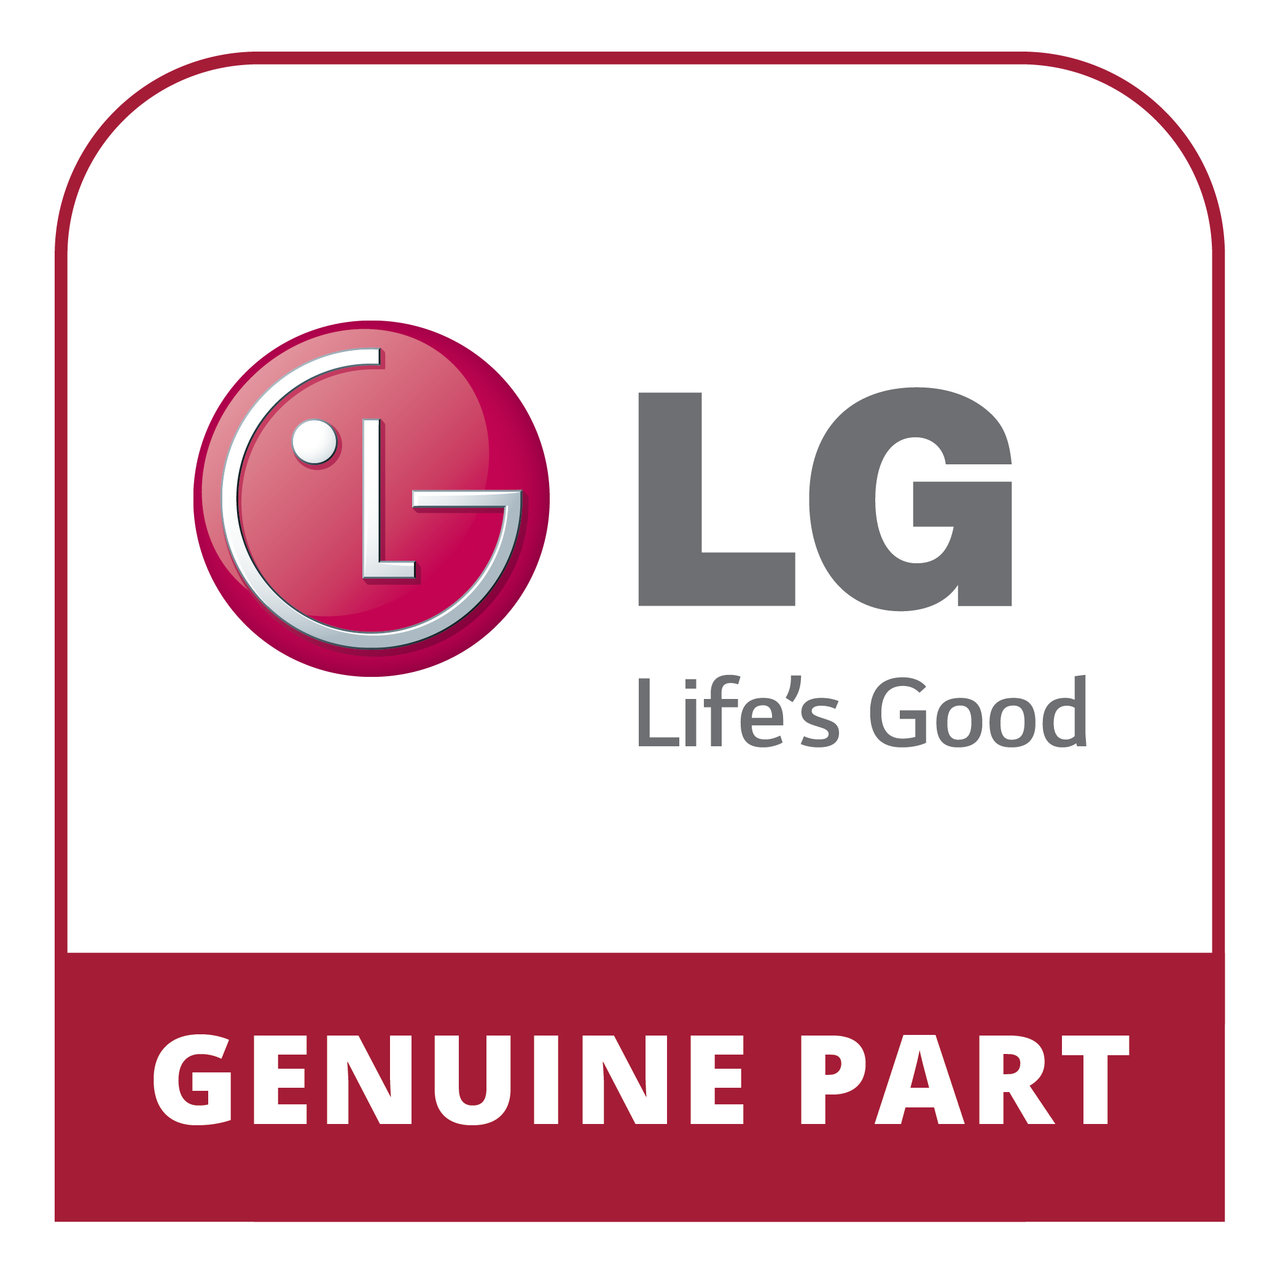 LG AJR55754310 - Exchanger Assembly - Genuine LG Part